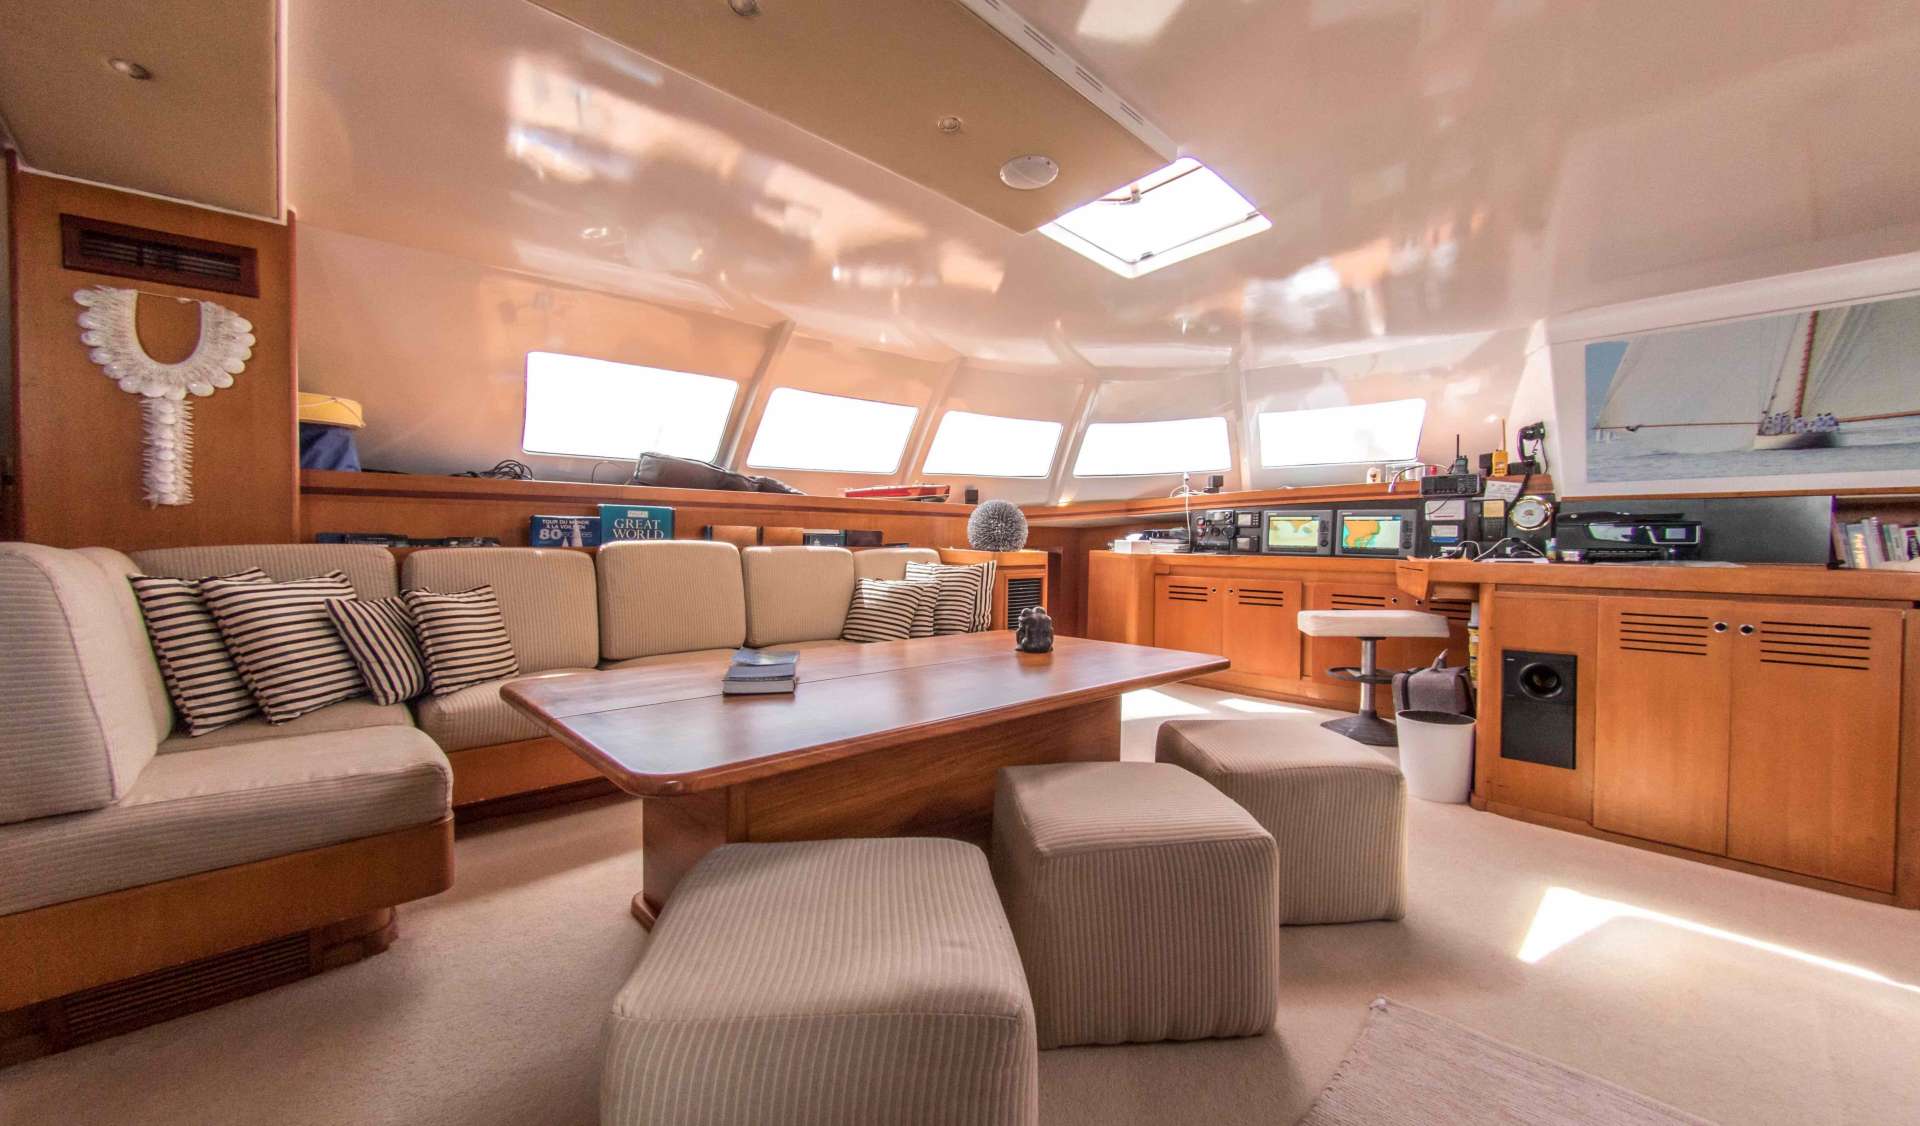 LONESTAR - Luxury yacht charter Maldives & Boat hire in Indian Ocean & SE Asia 2